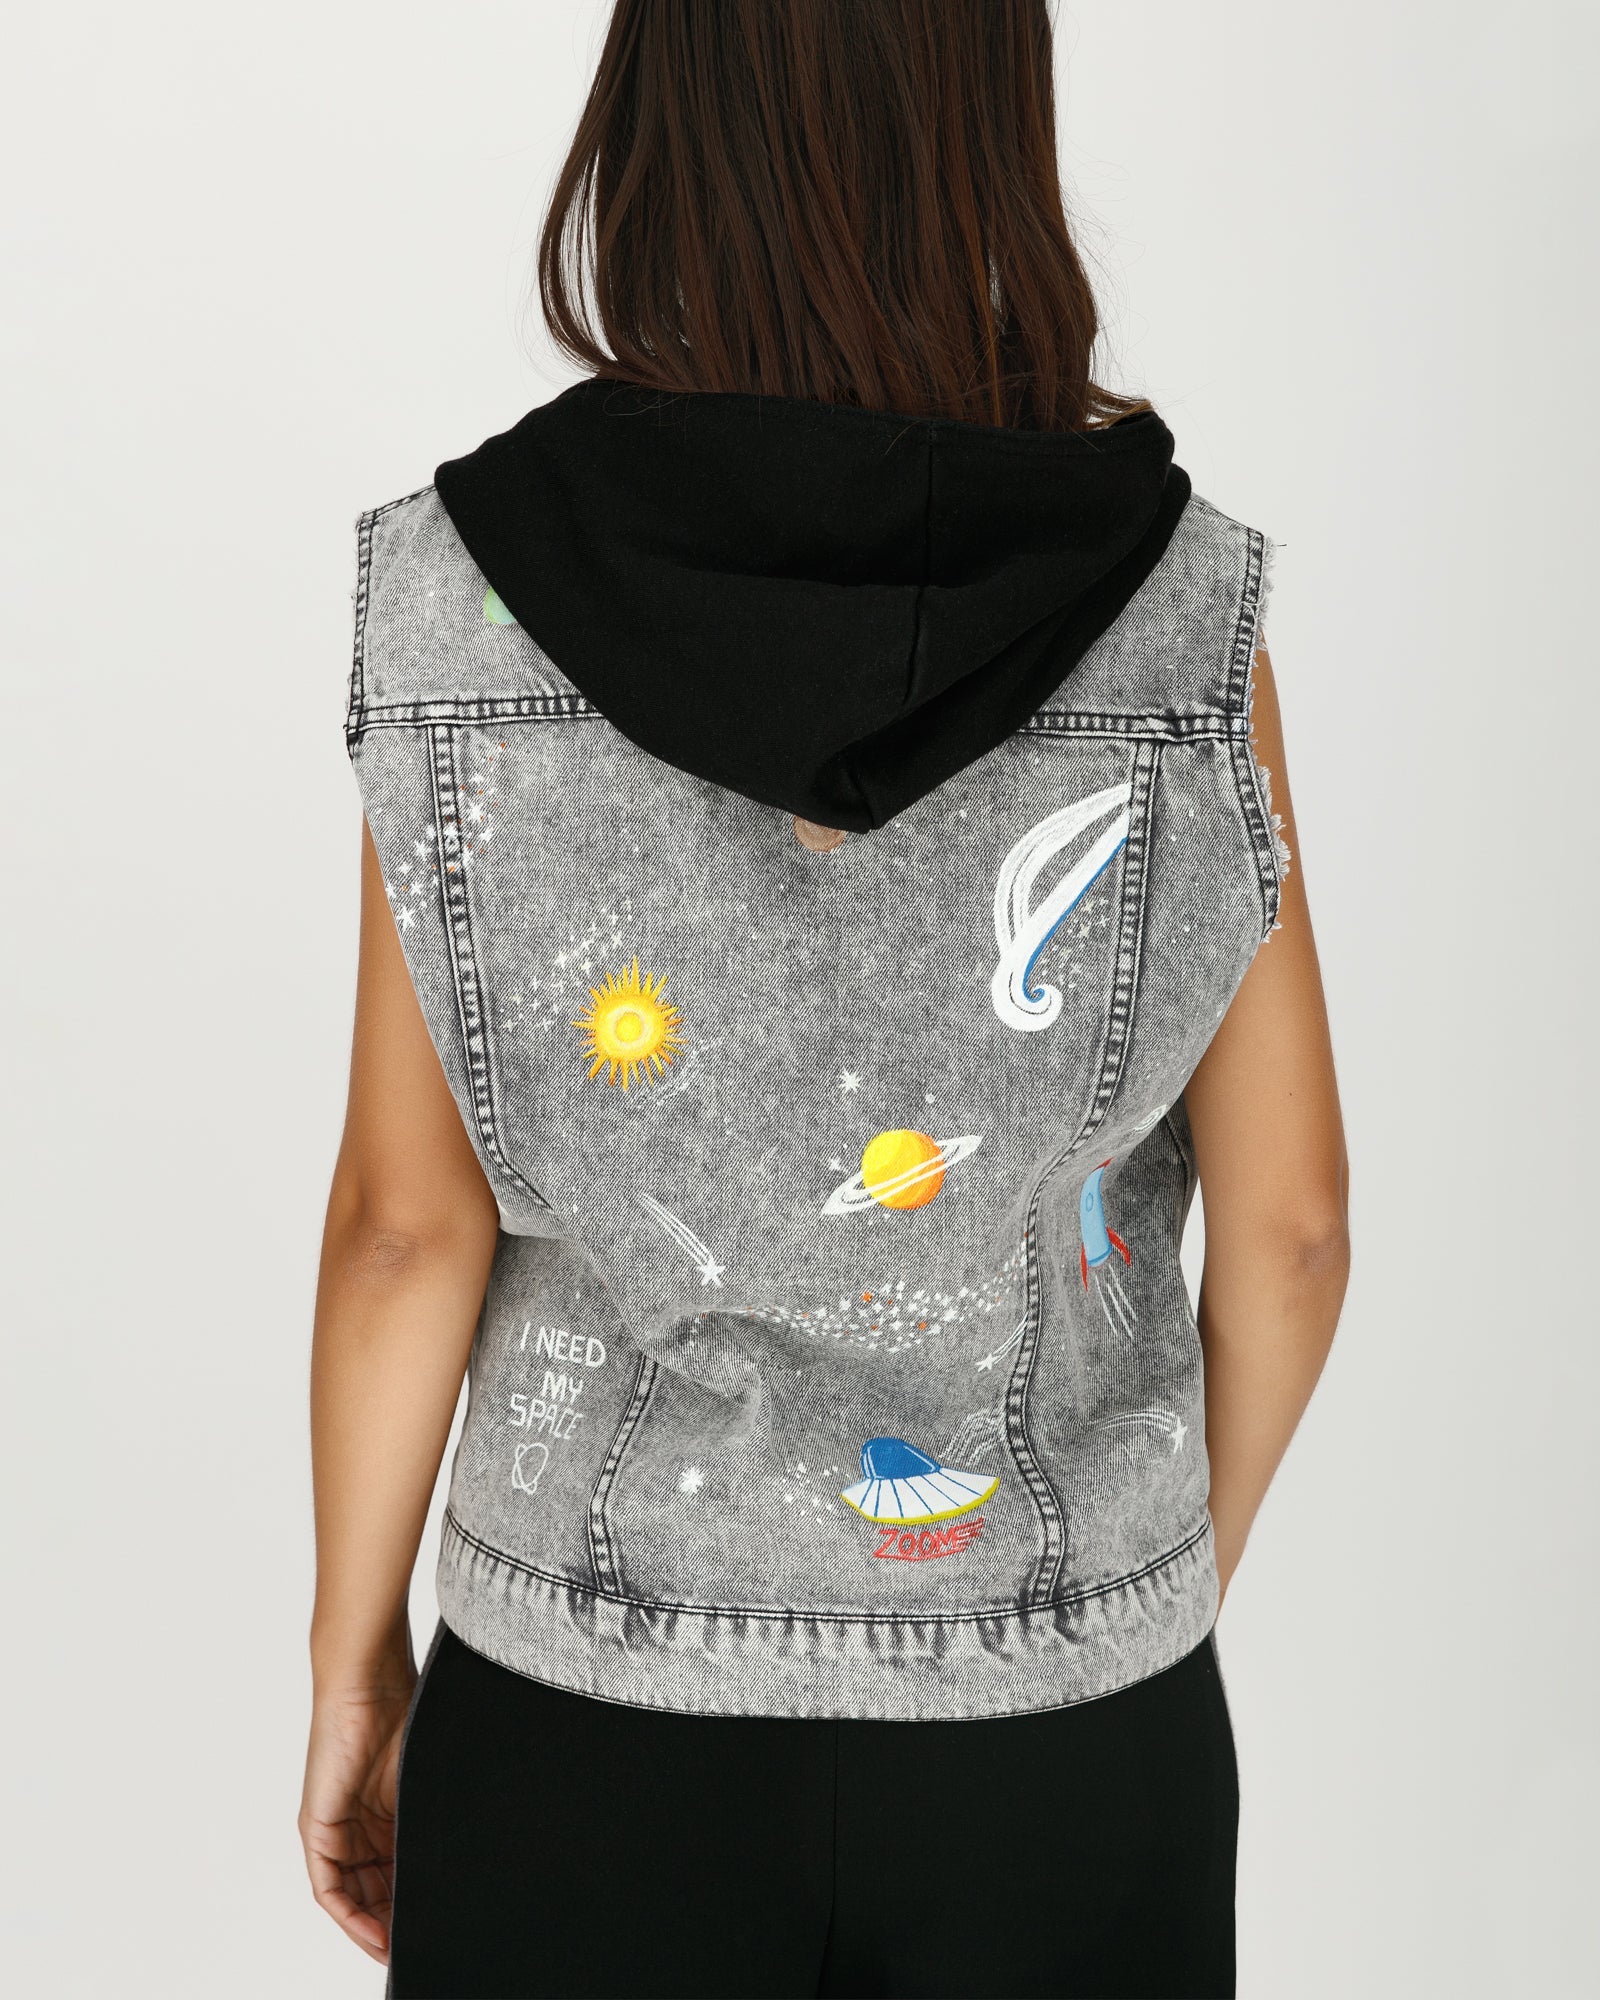 "My space" denim vest